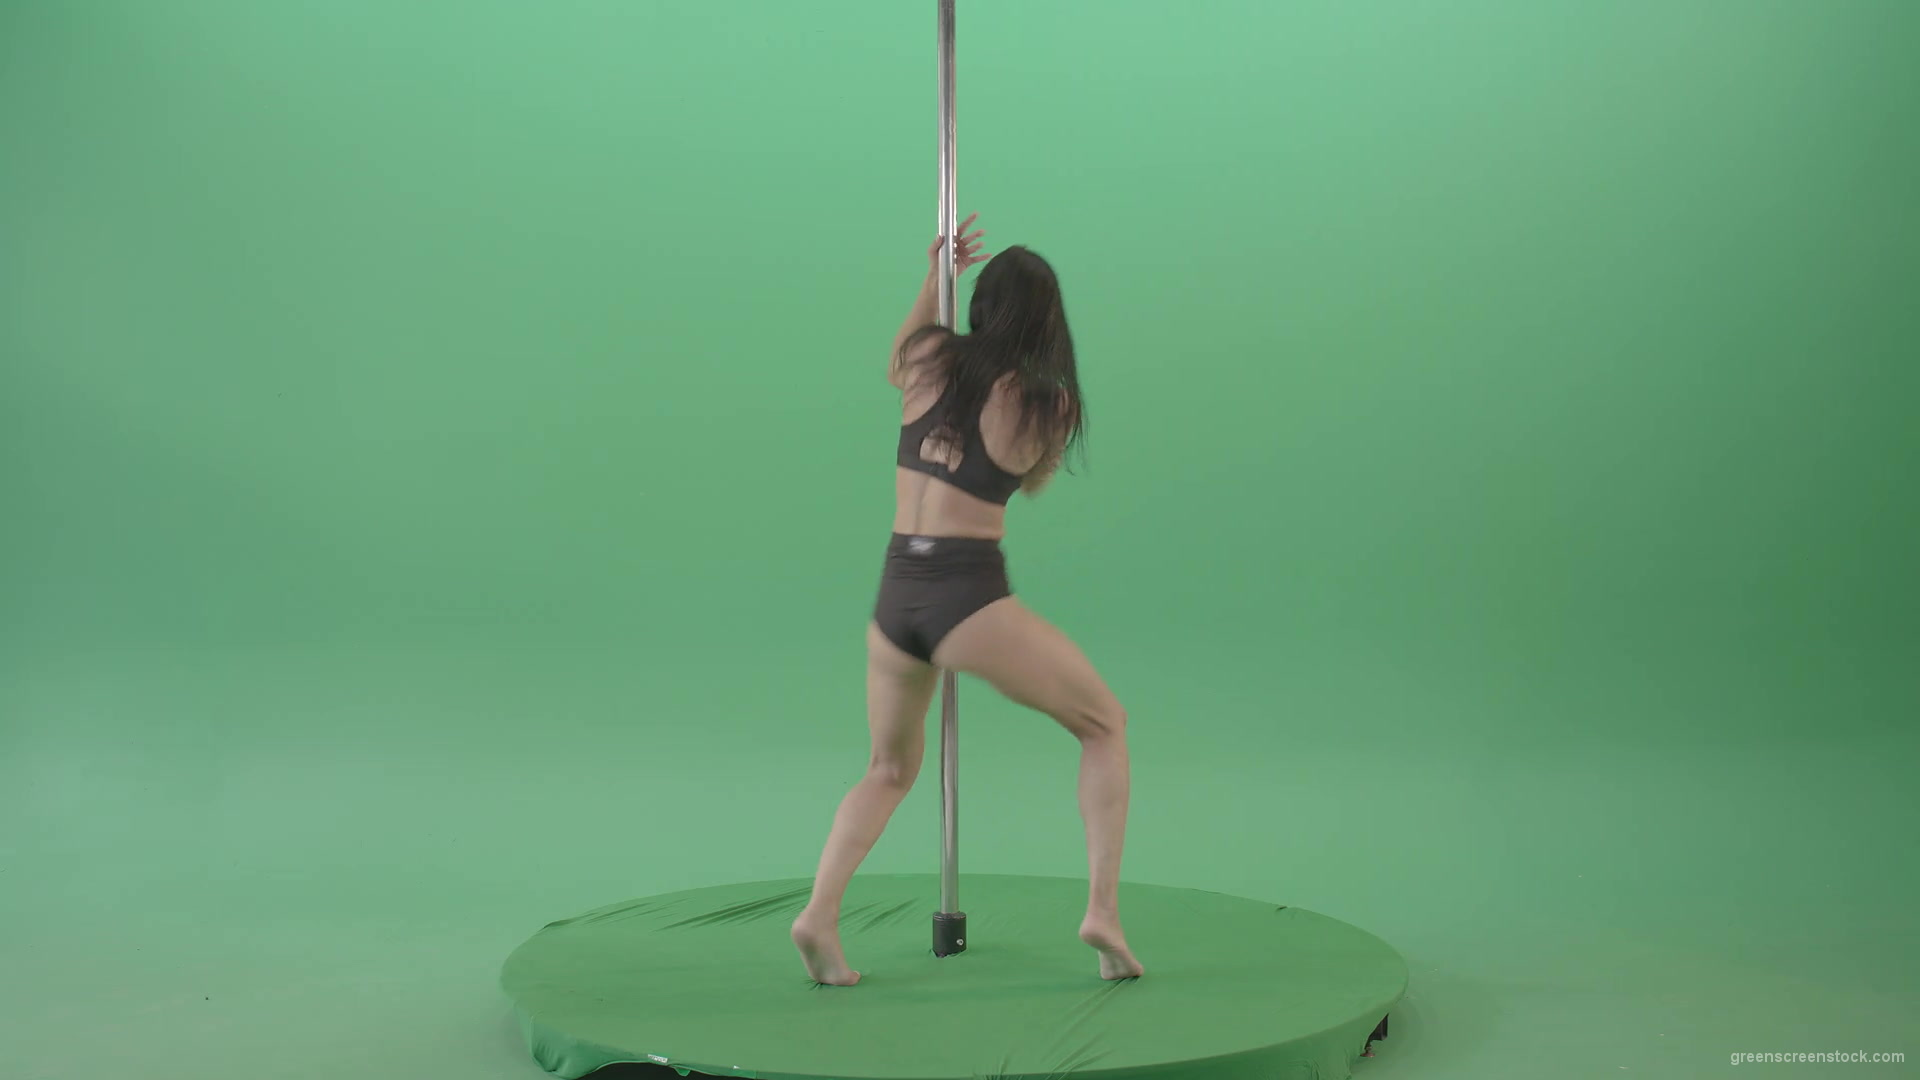 Brunette-Strip-Model-Girl-has-fun-on-dancing-pole-isolated-on-Green-Screen-4K-Video-Footage-1920_004 Green Screen Stock